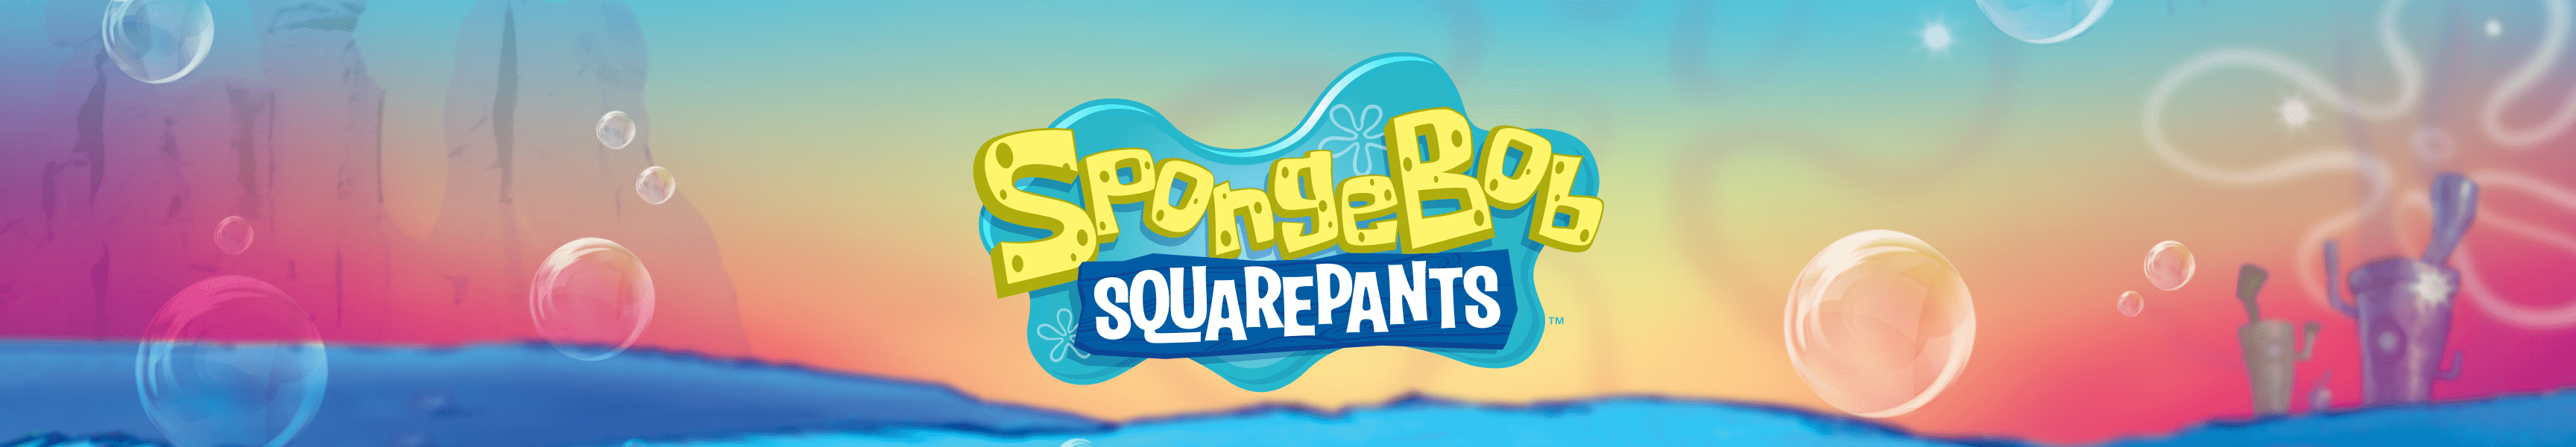 SpongeBob SquarePants Towels